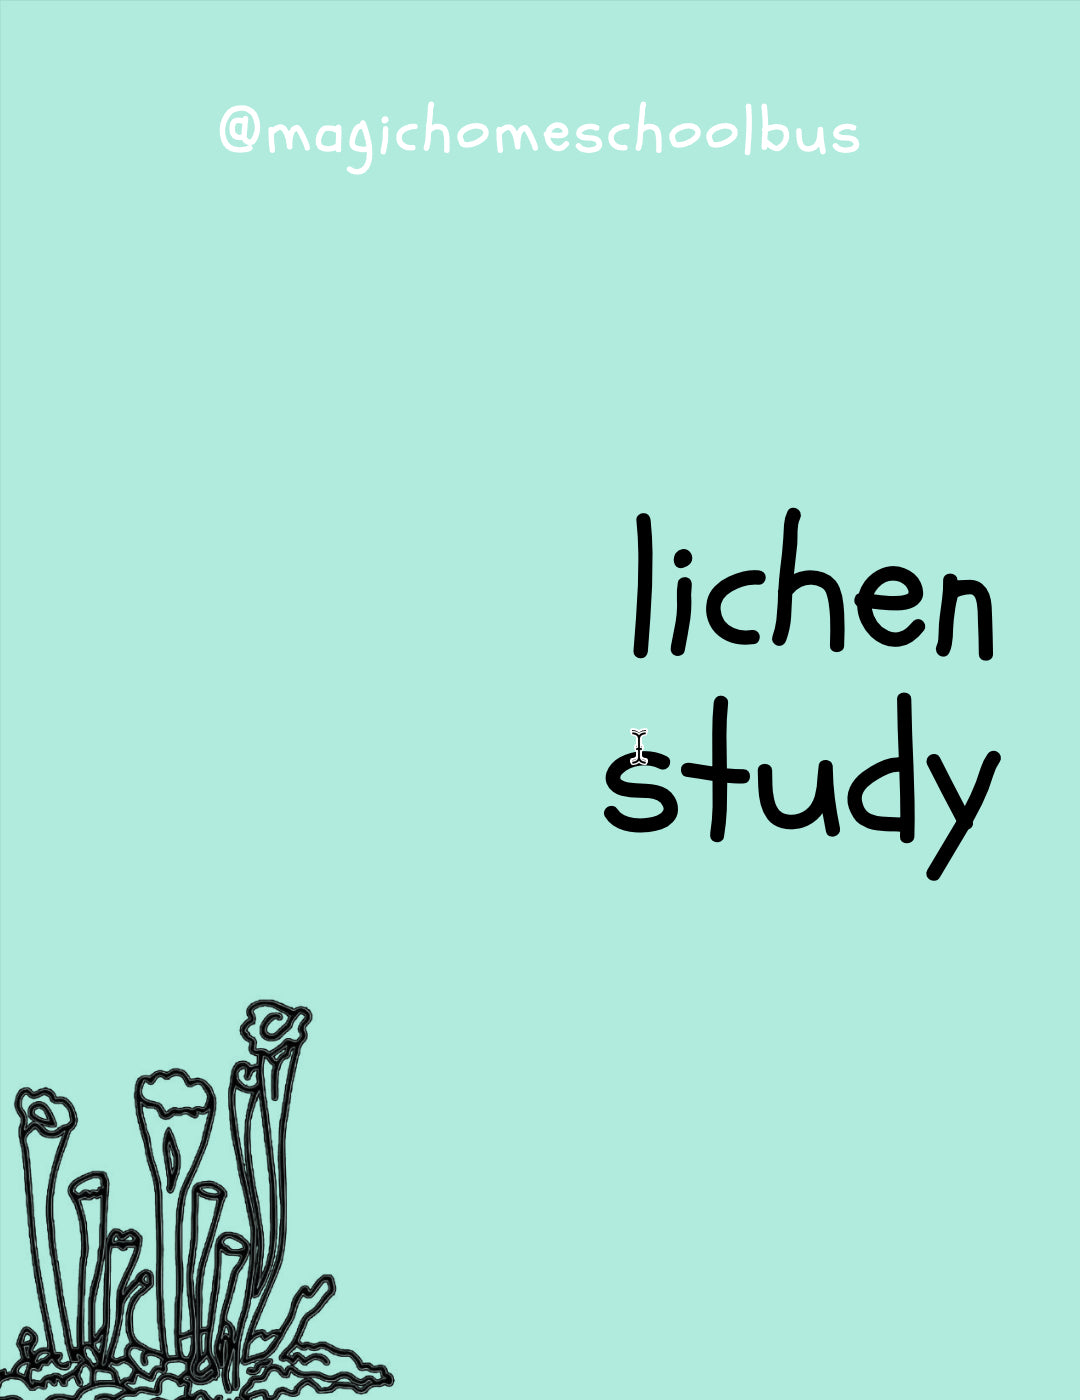 Magic Homeschool Bus - Lichen Study